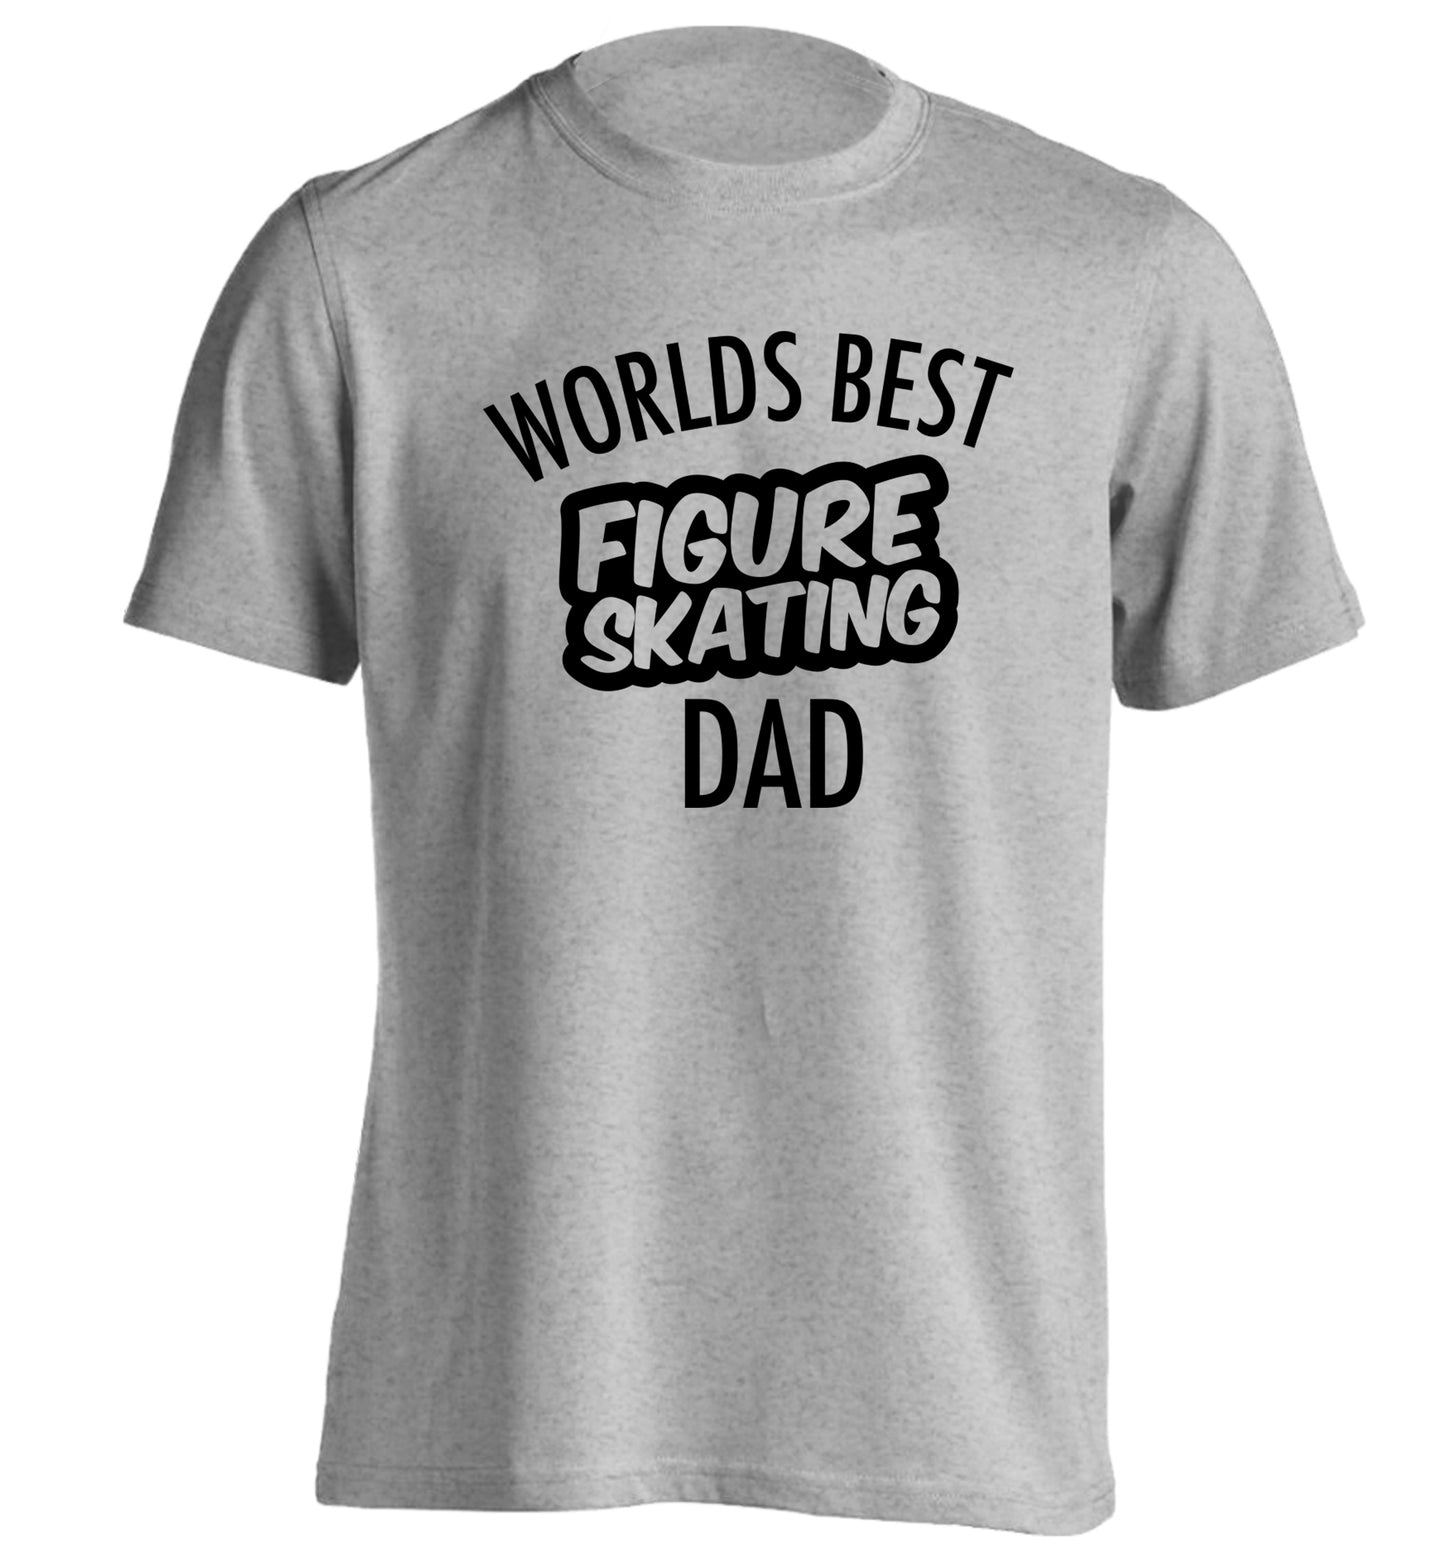 Worlds best figure skating dad adults unisexgrey Tshirt 2XL